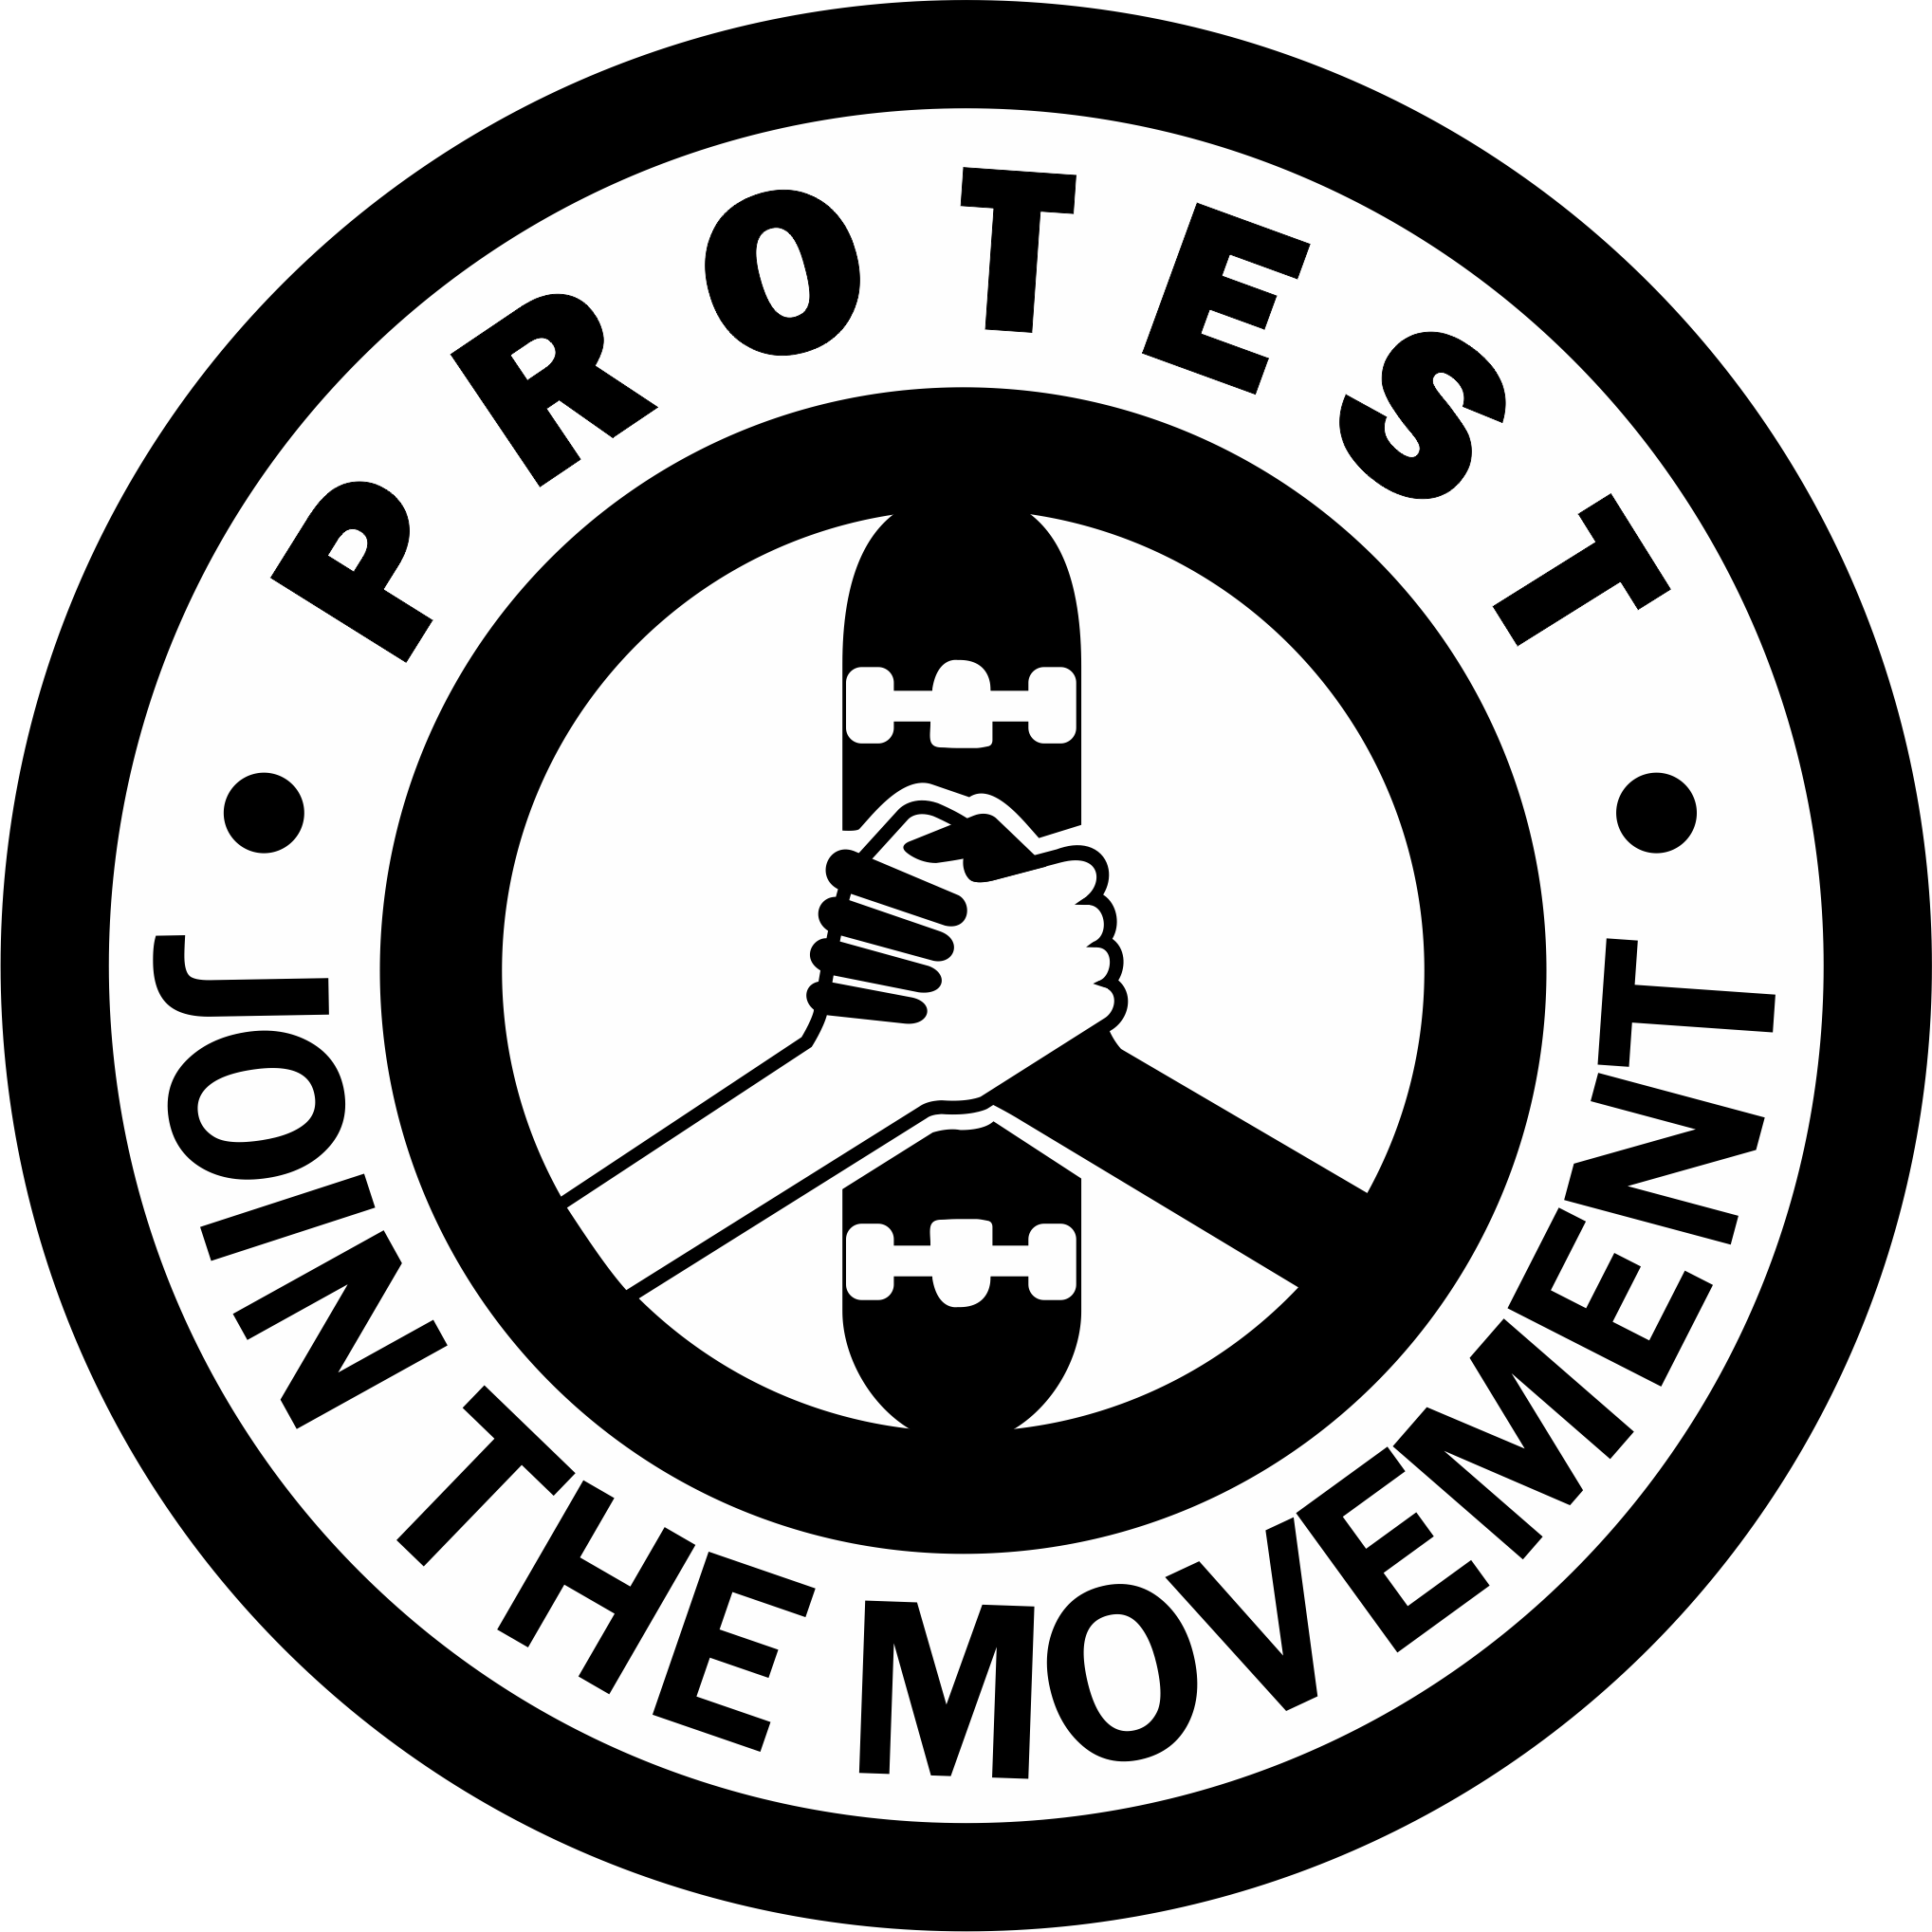 Protest Movement